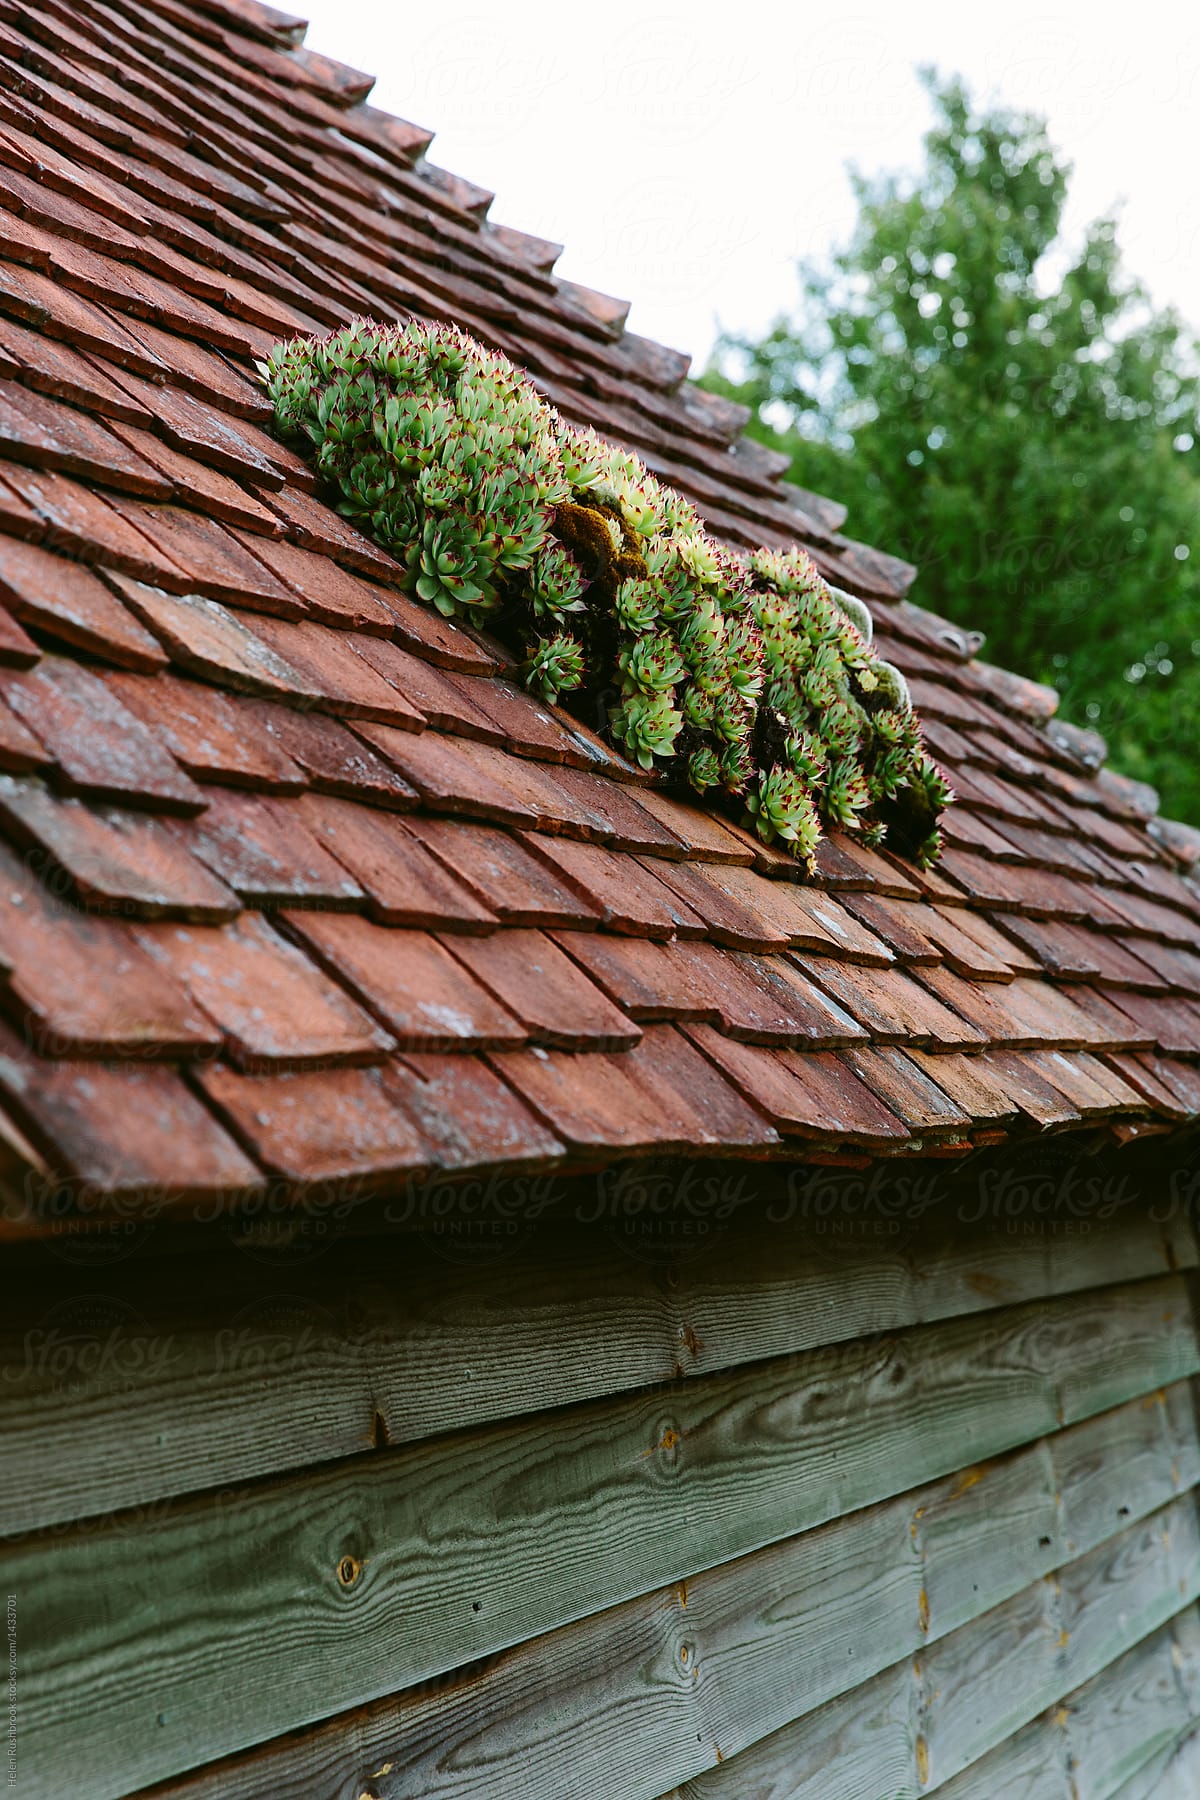 Sempervivums growing on a tiled roof